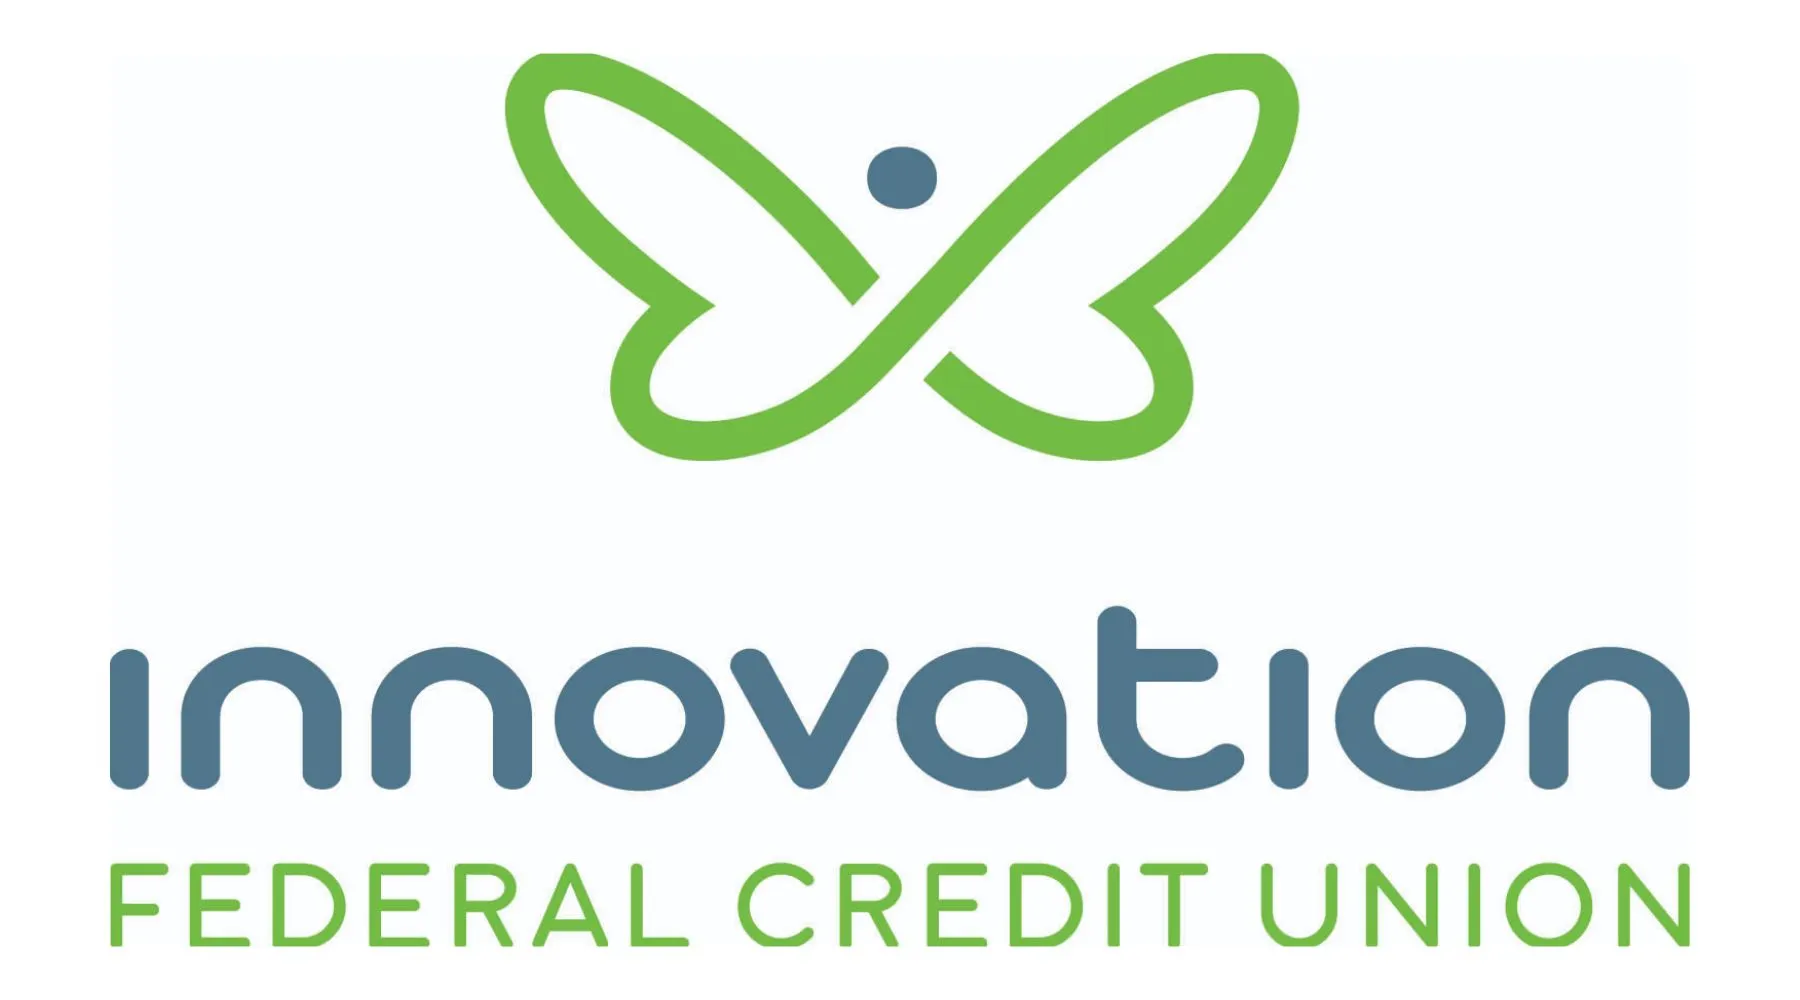 Innovation Federal Credit Union